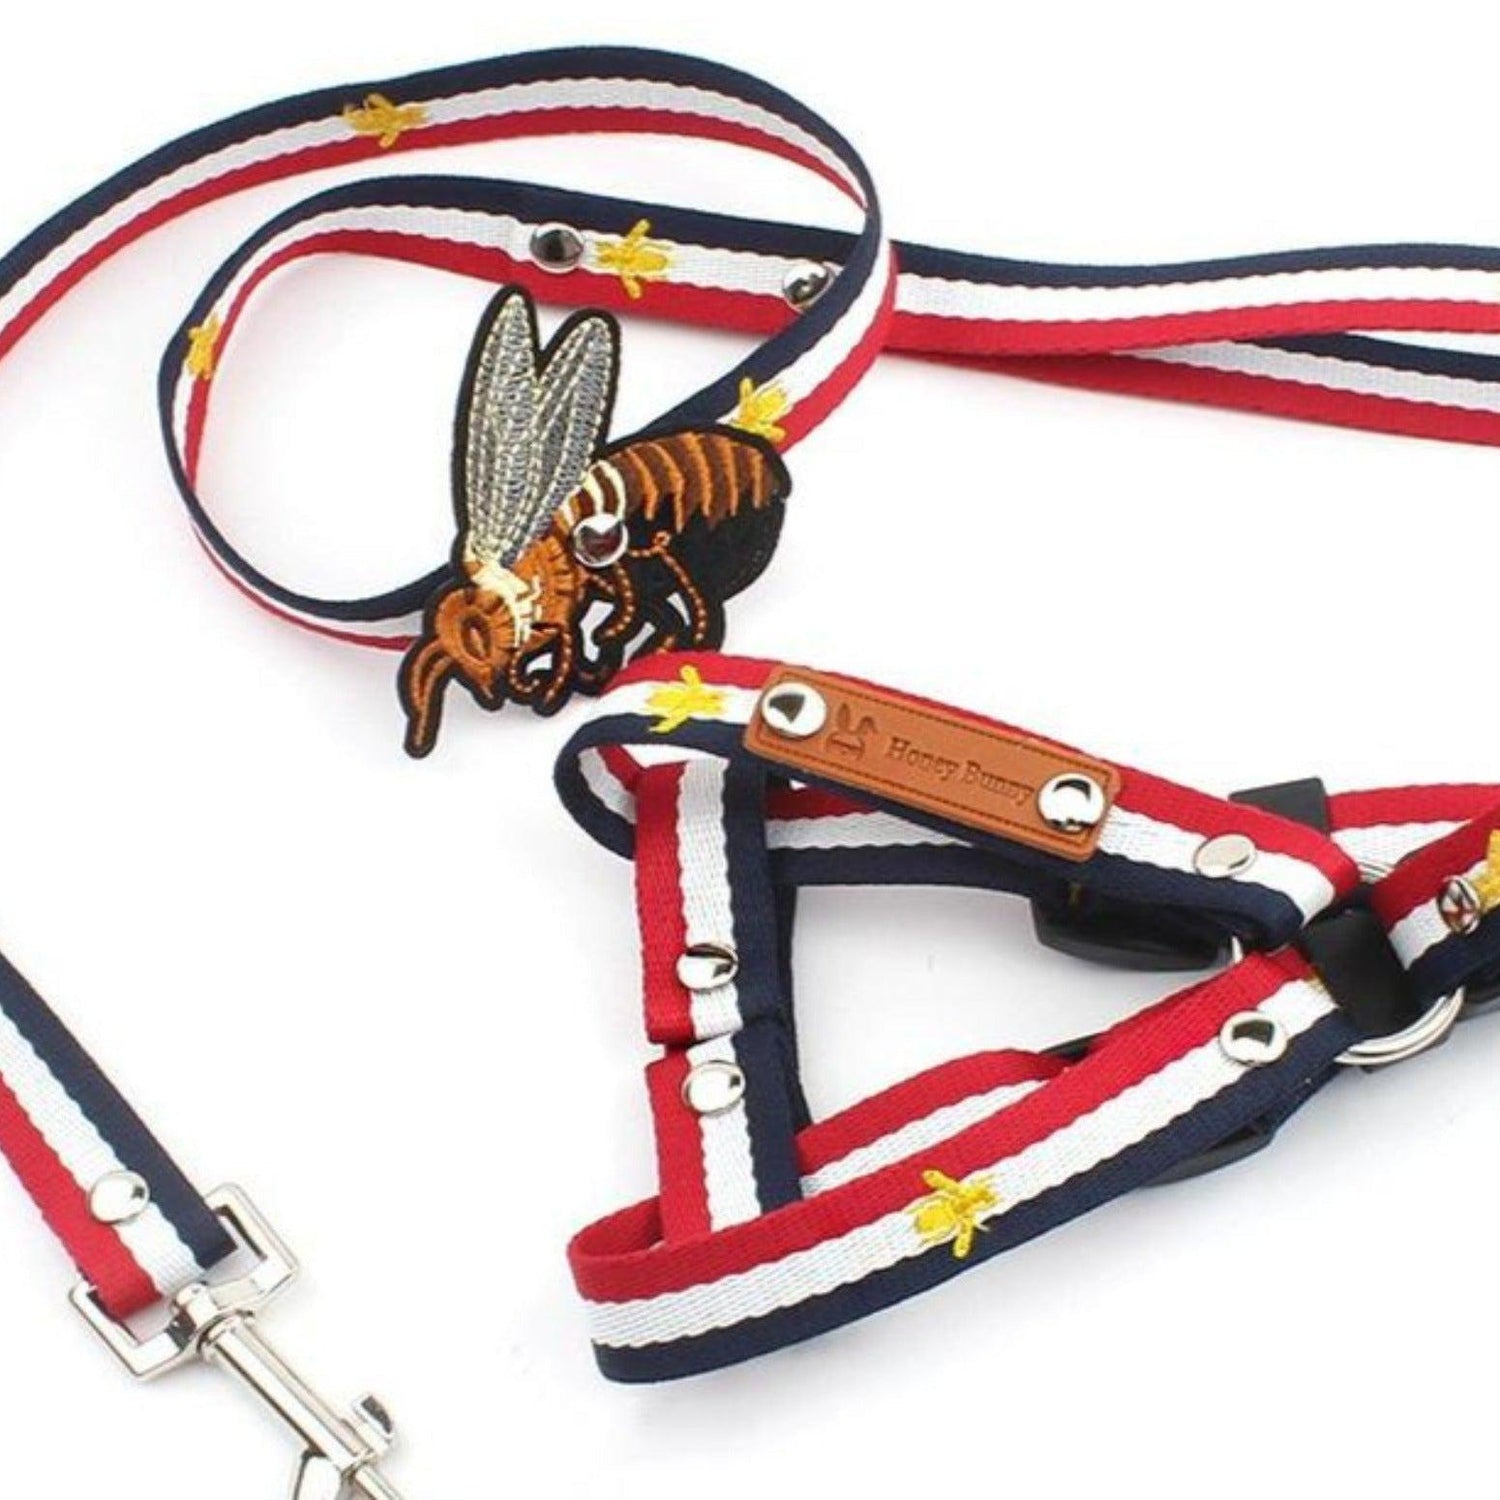 Honey Bunny Sailor's Man Dog Harness and Leash Set